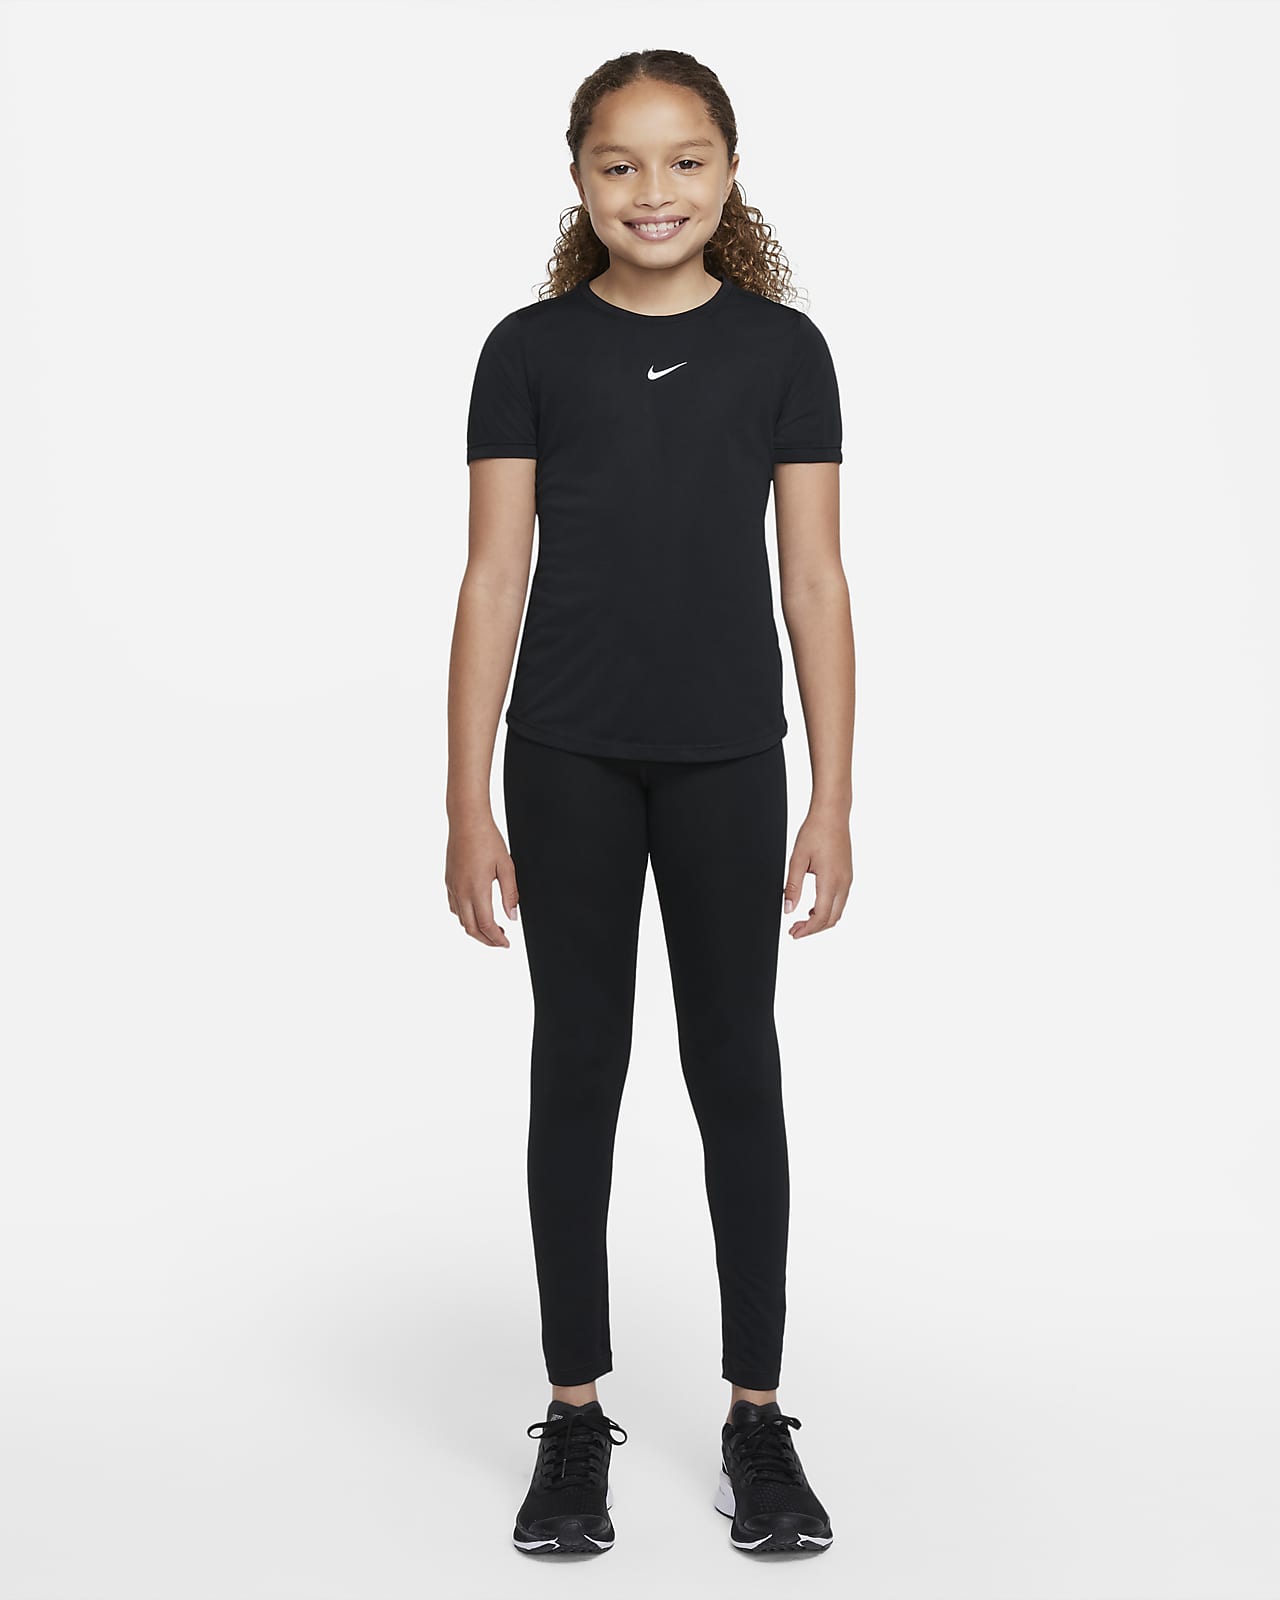 Nike One Big (Girls\') Short-Sleeve Kids\' Top